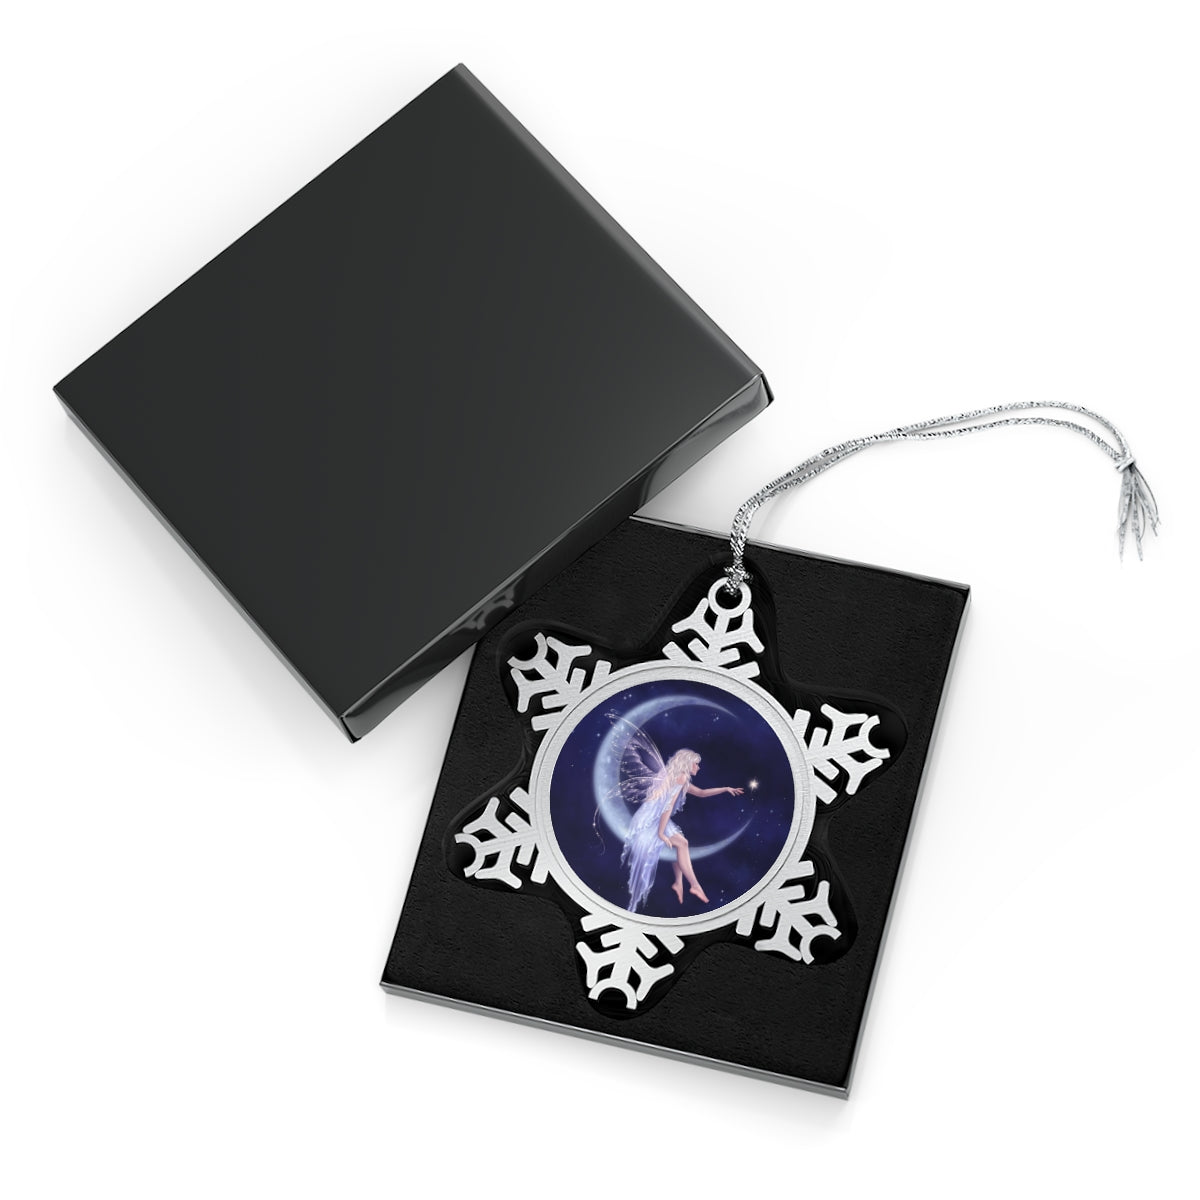 Snowflake Ornament - Birth of a Star